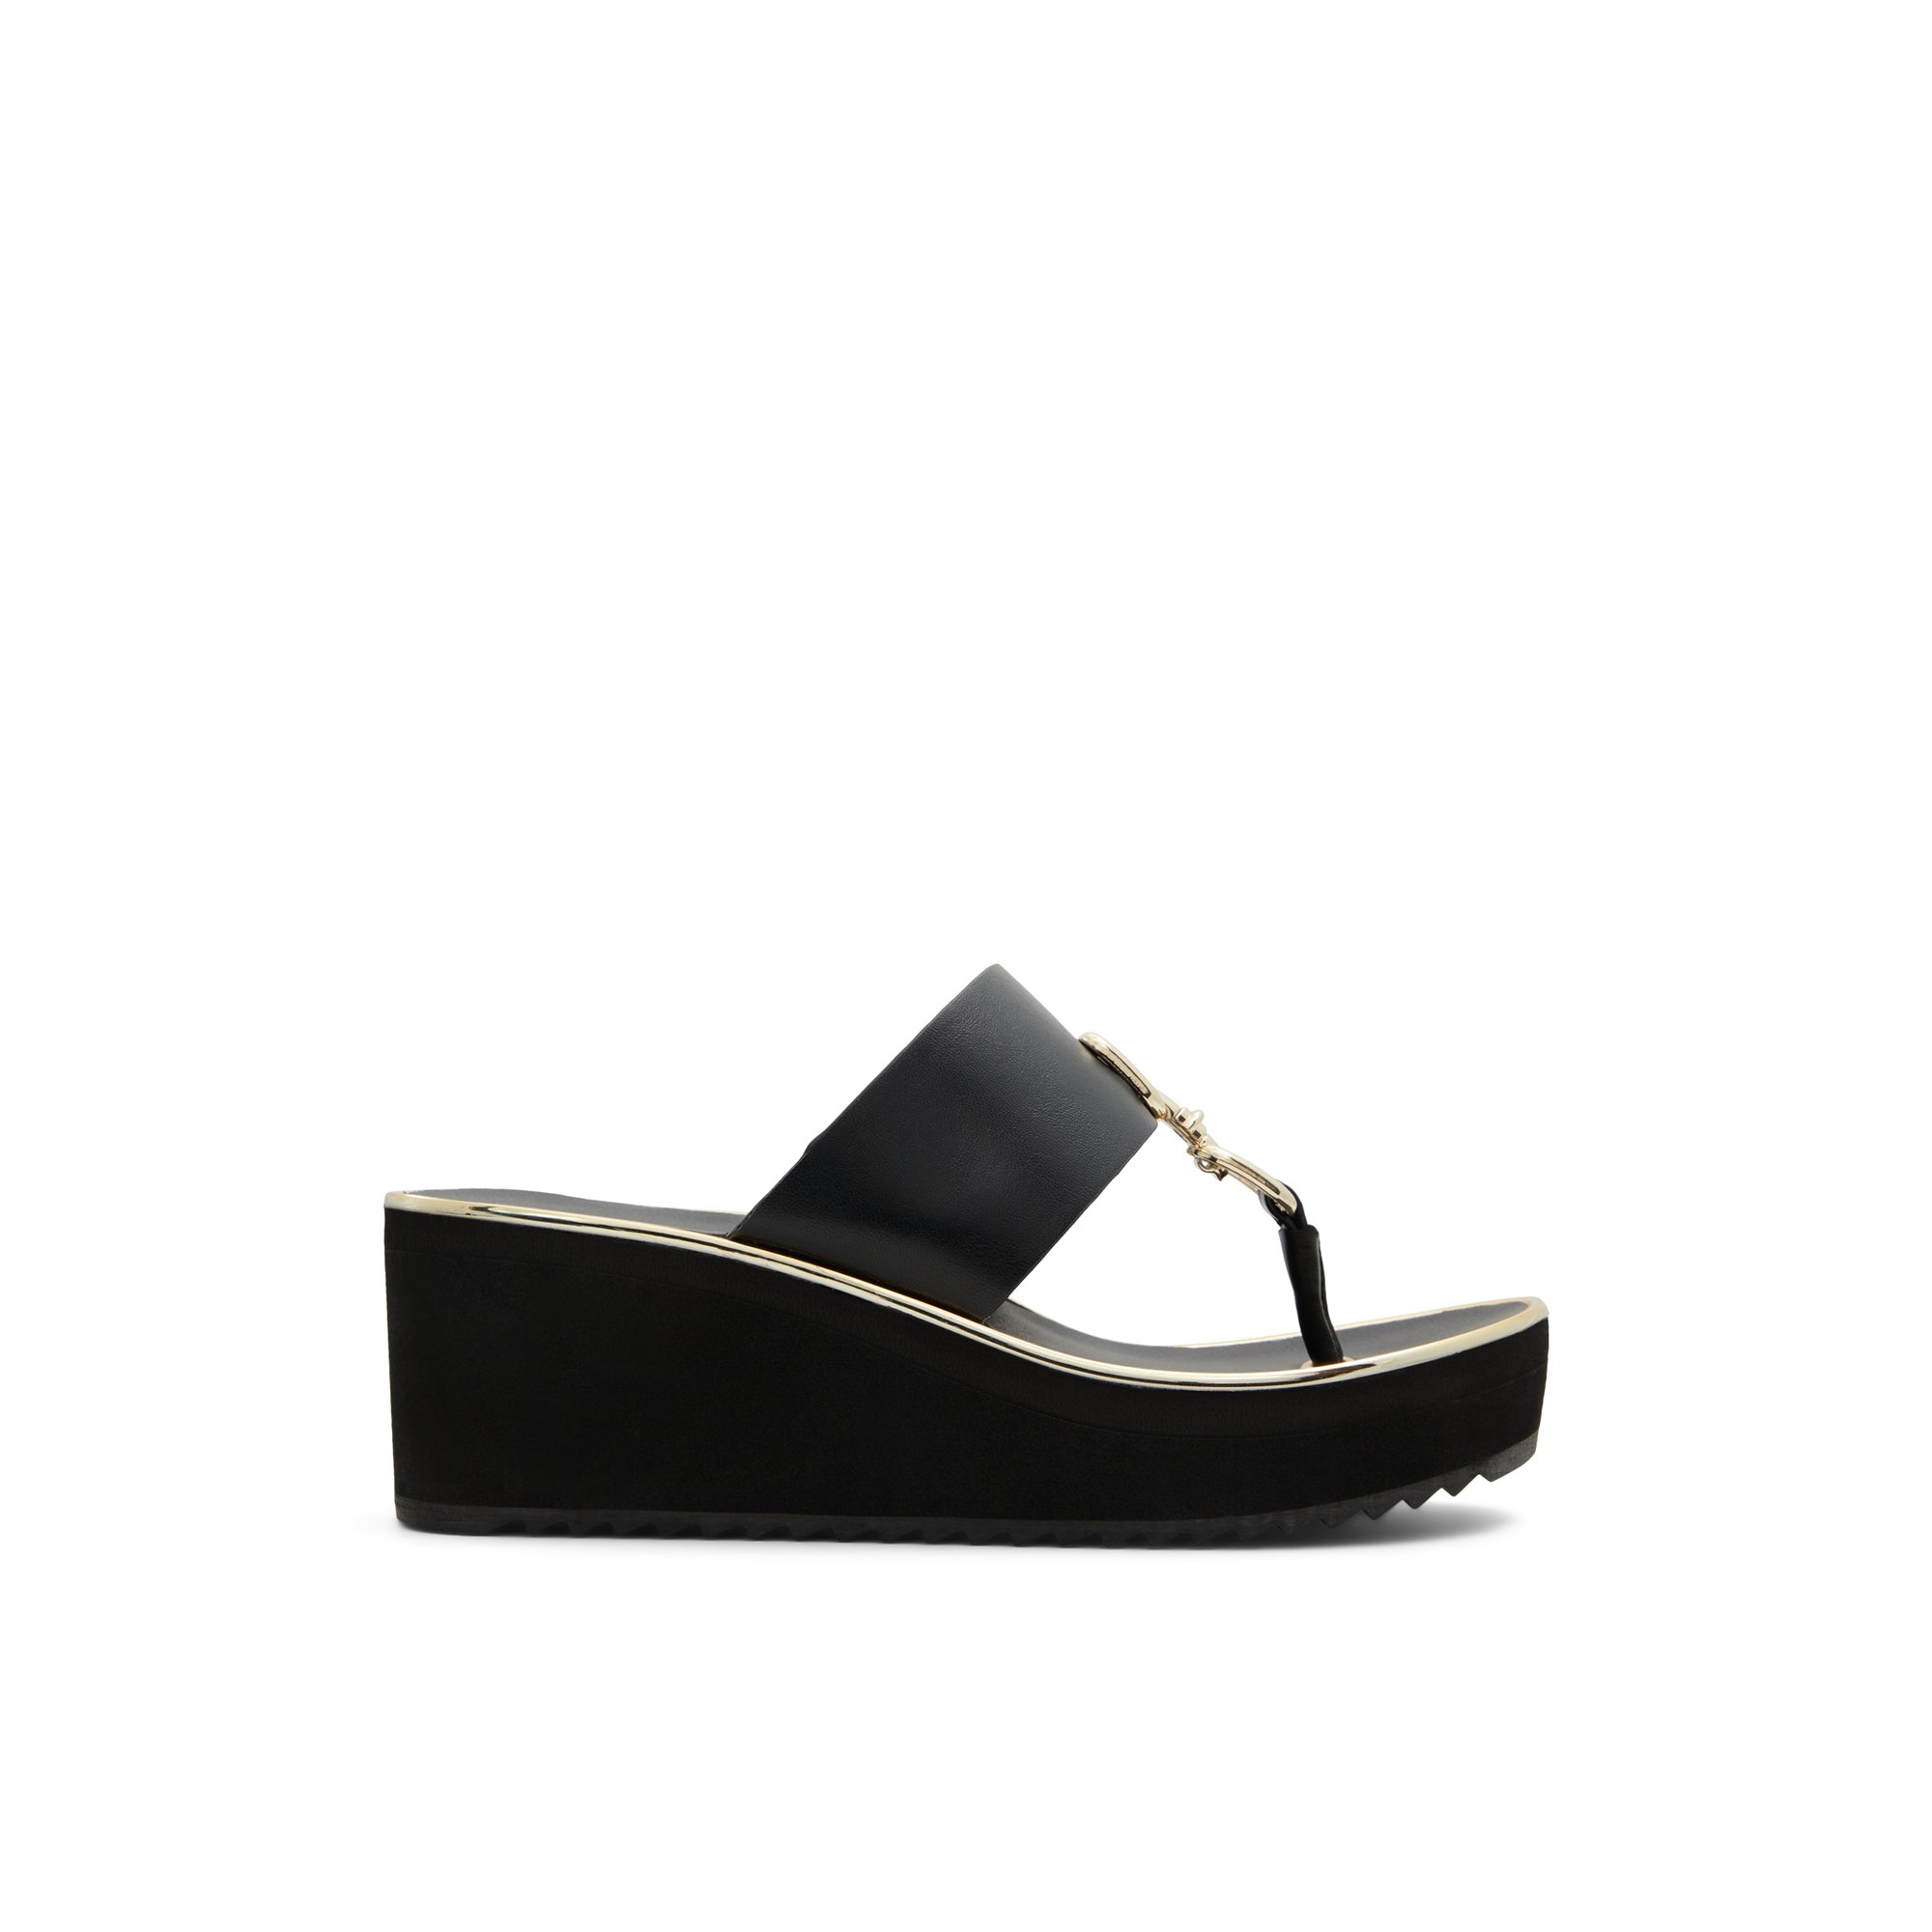 ALDO Maesllan - Women's Wedge Sandals - Black